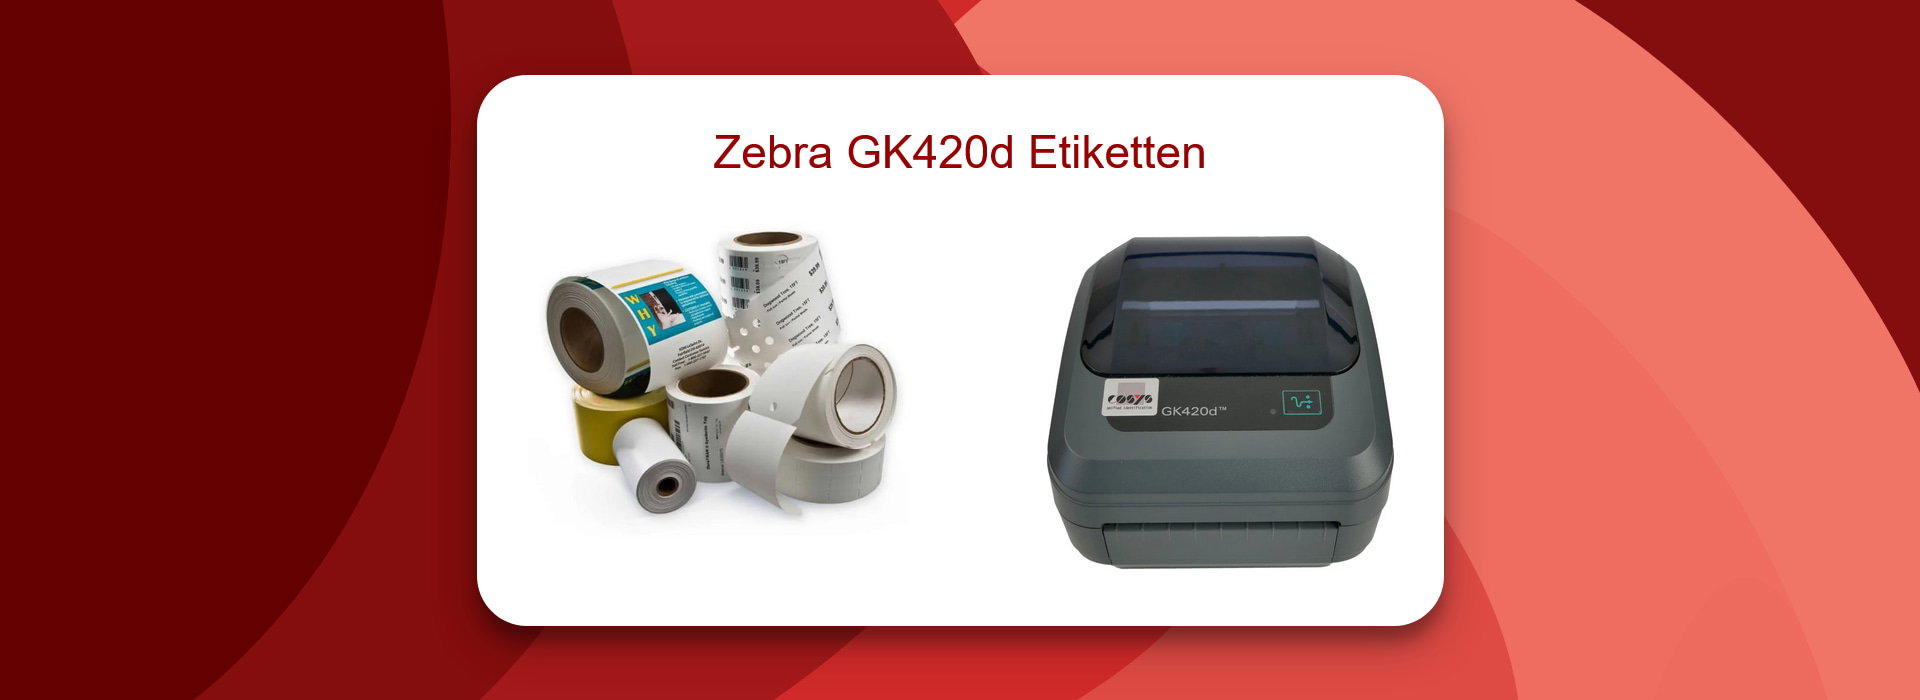 Zebra GK420d Etiketten: Druckqualitäts-Tipps